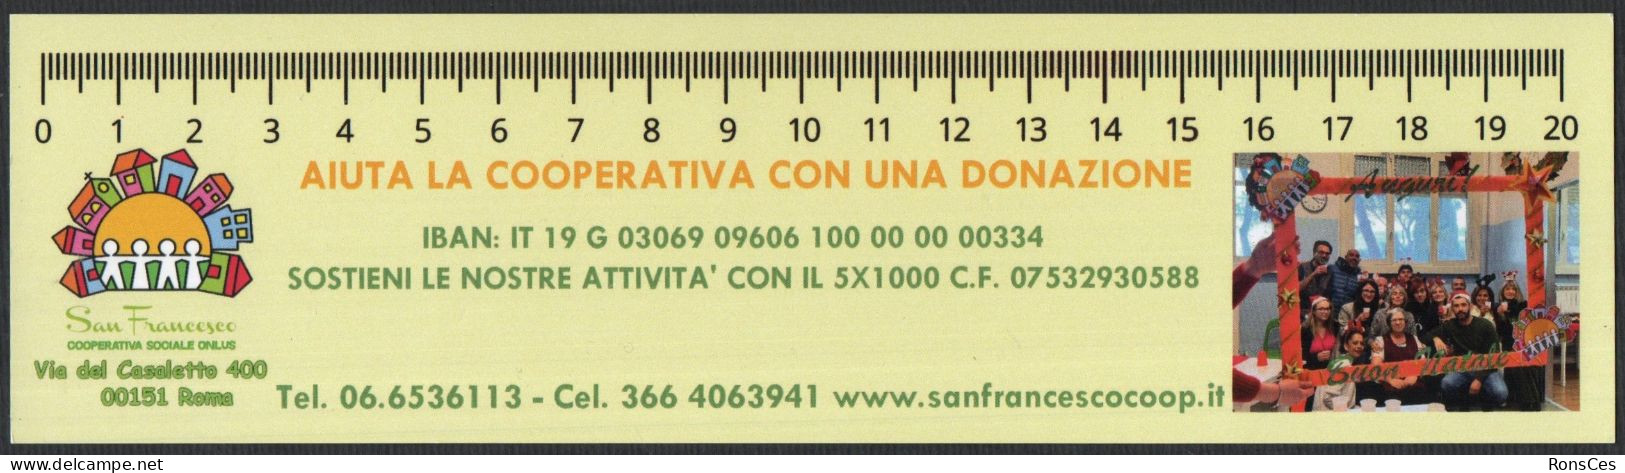 ITALIA - SEGNALIBRO / BOOKMARK - COOPERATIVA SOCIALE ONLUS SAN FRANCESCO - I - Bookmarks